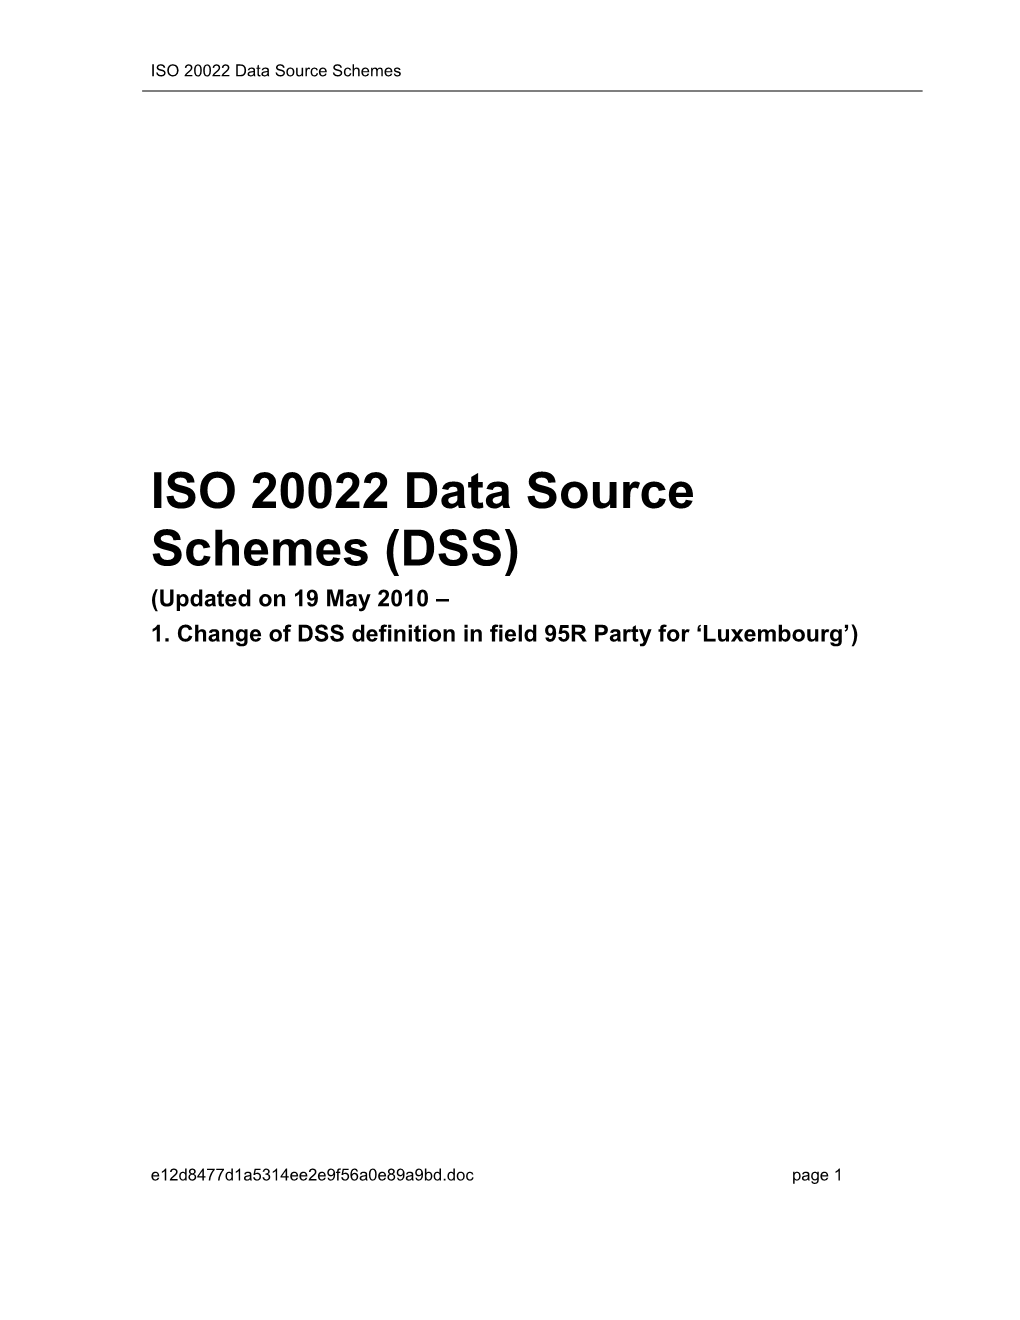 DSS in ISO 20022